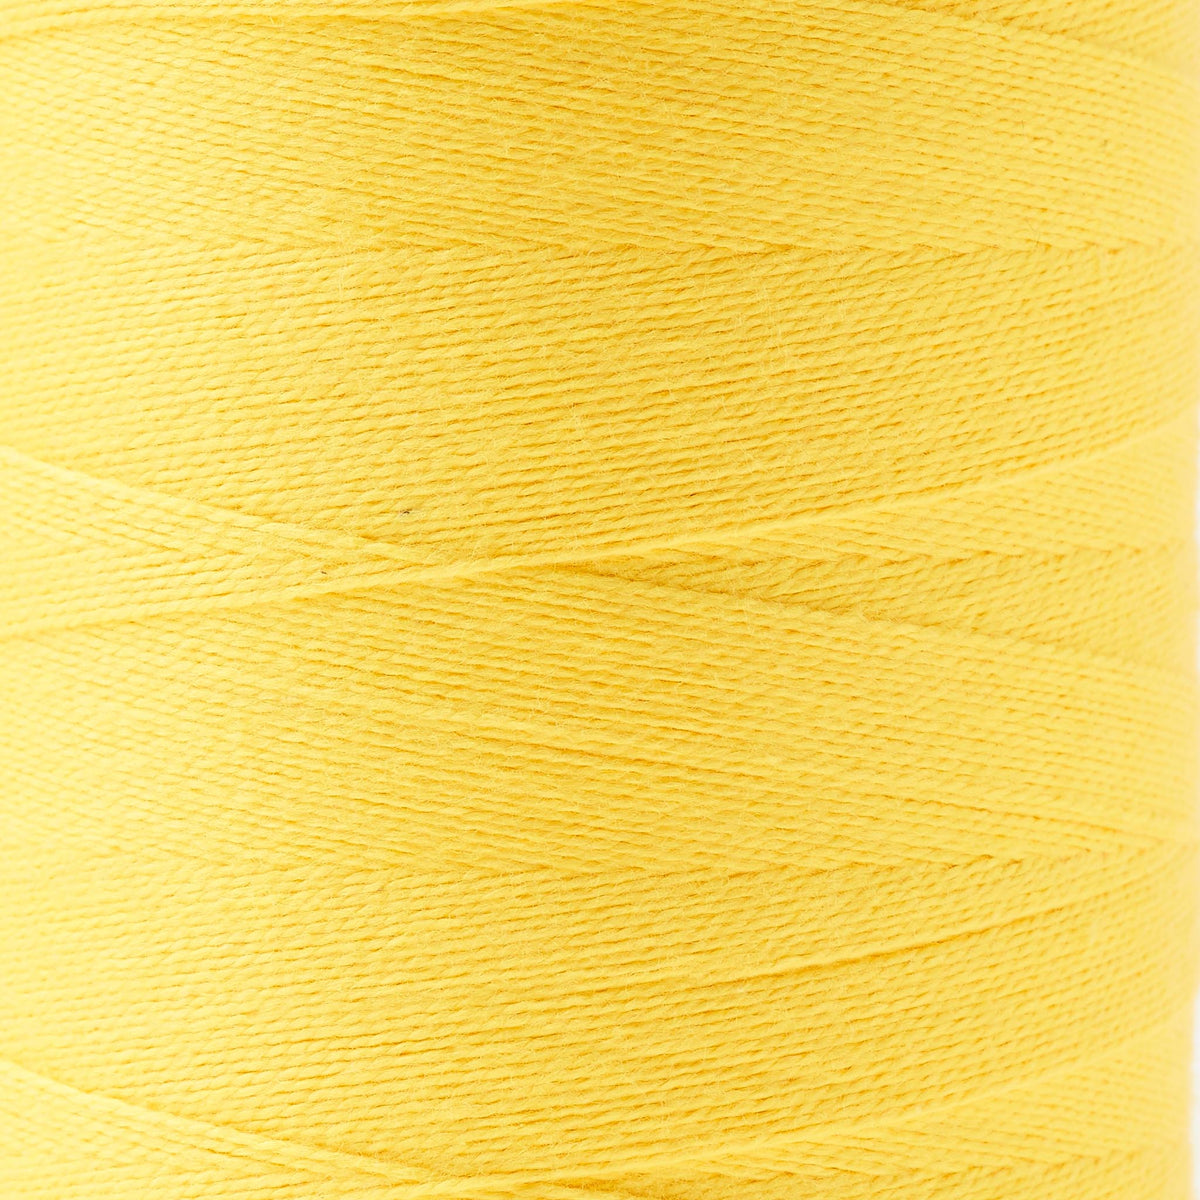 8/2 Un-Mercerized Cotton Weaving Yarn ~ Orange - Gist Yarn